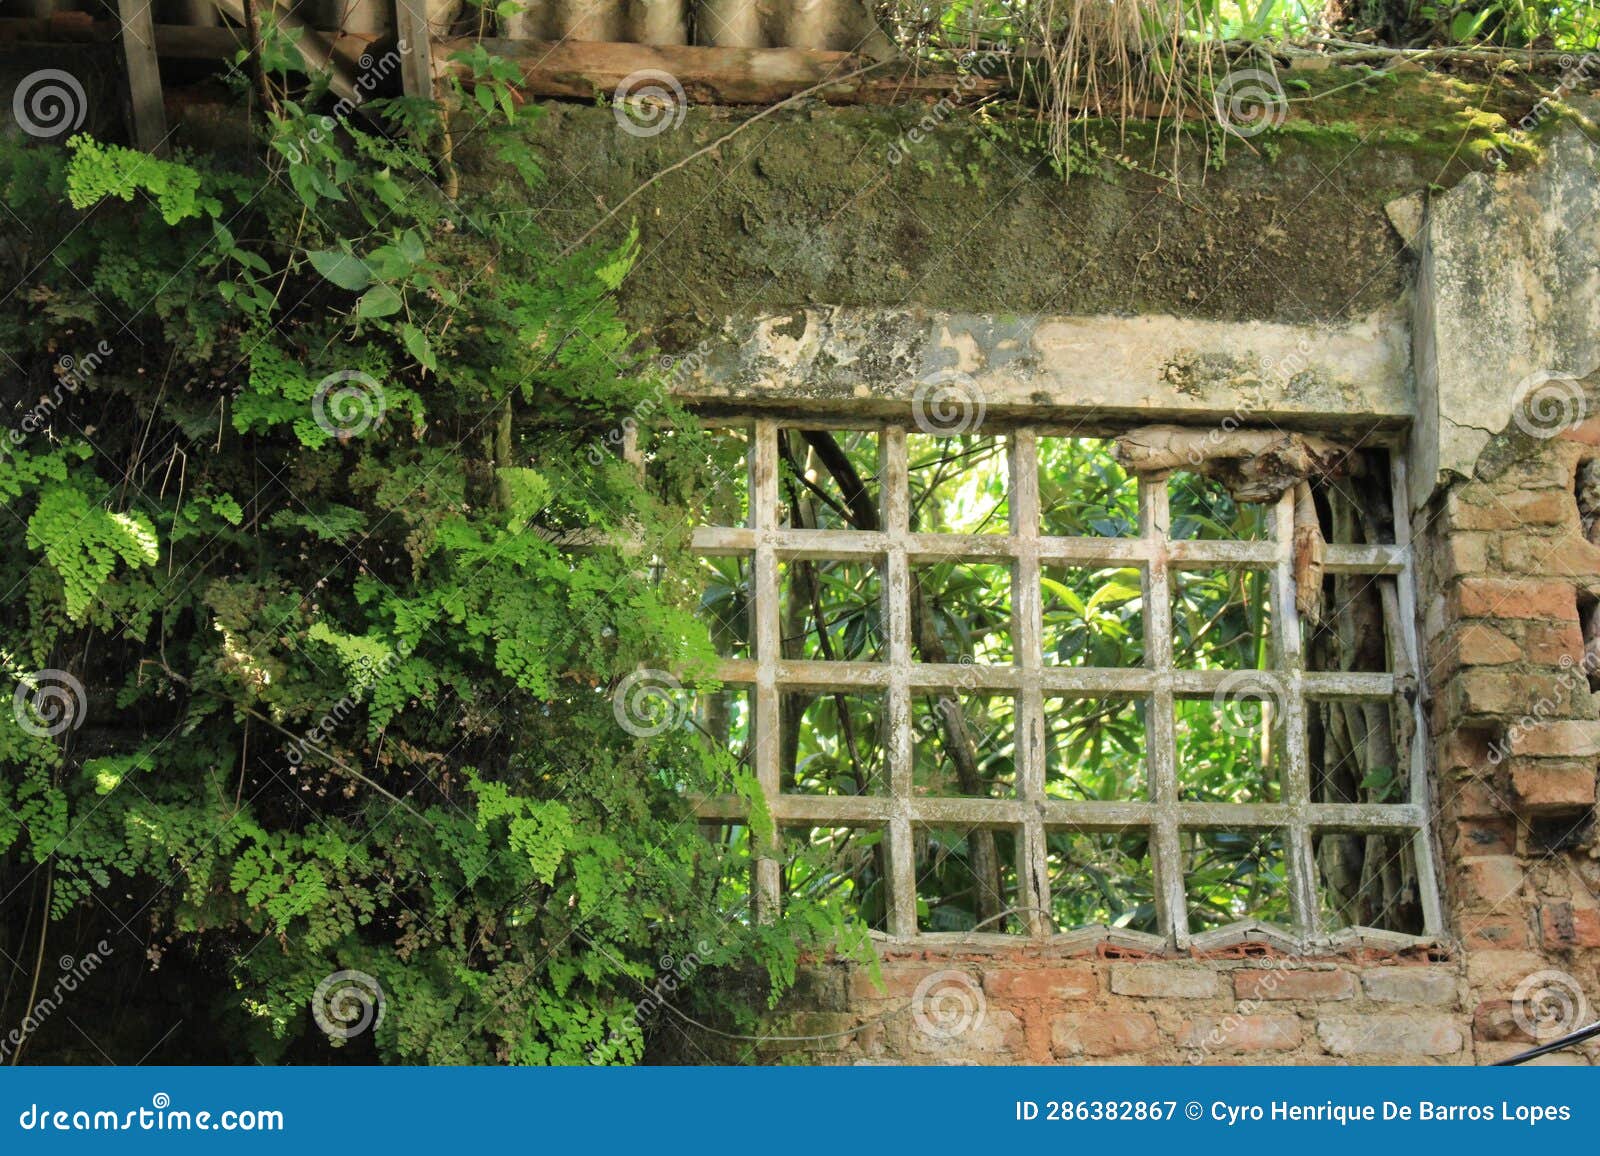 artistic window, juliano moreira colony, historic medical institute in rio de janeiro